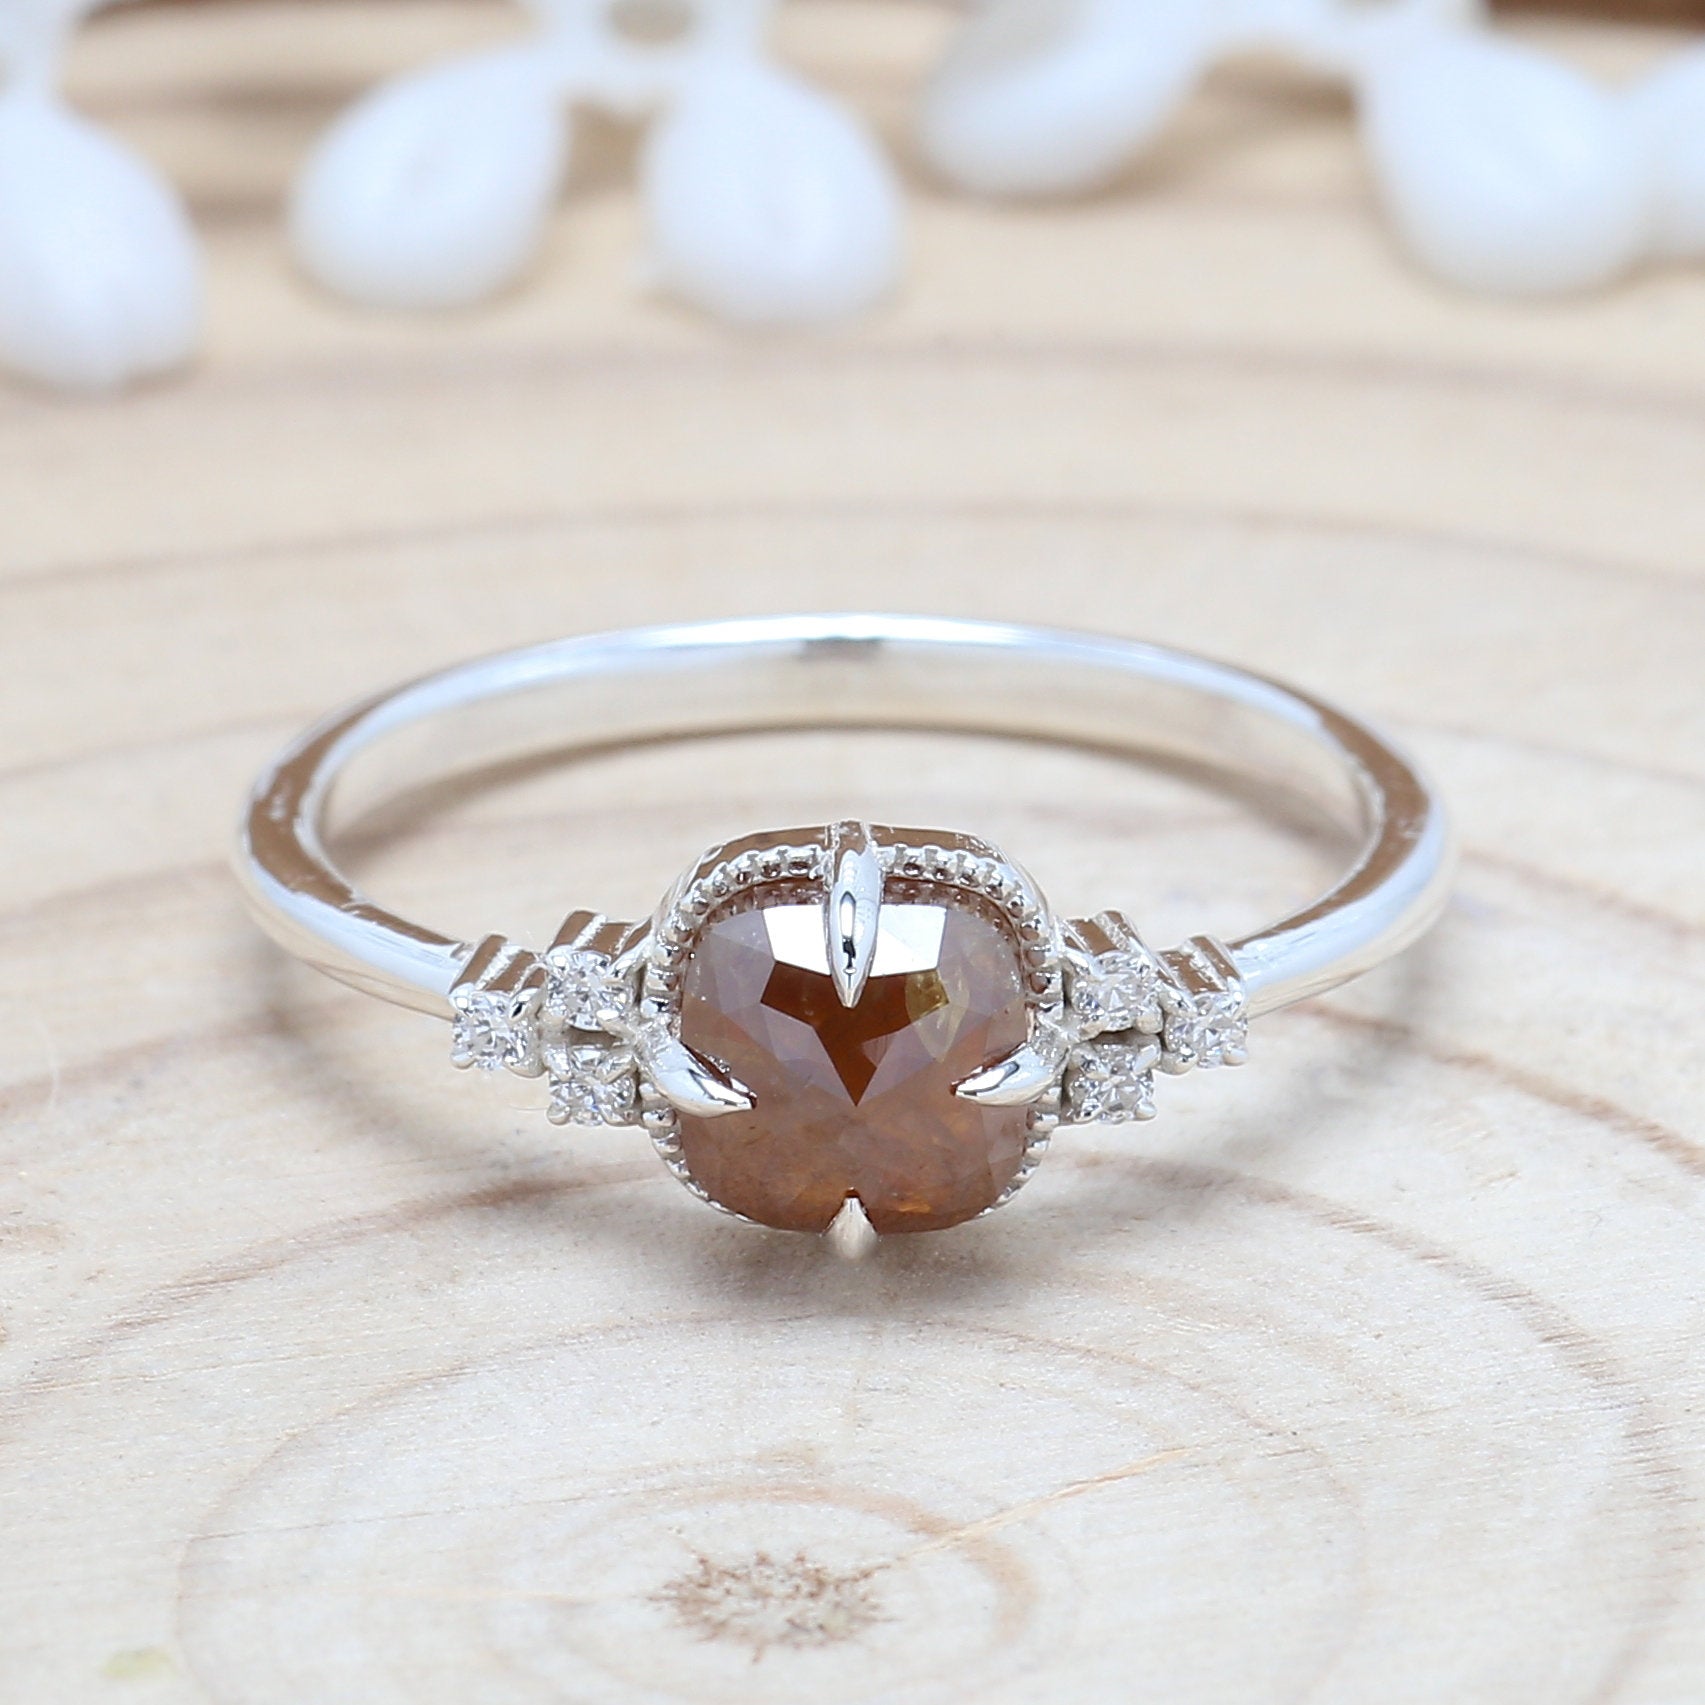 Brown Cushion Diamond 14K Solid Rose White Yellow Gold Ring Engagement Wedding Gift Ring KDN9211